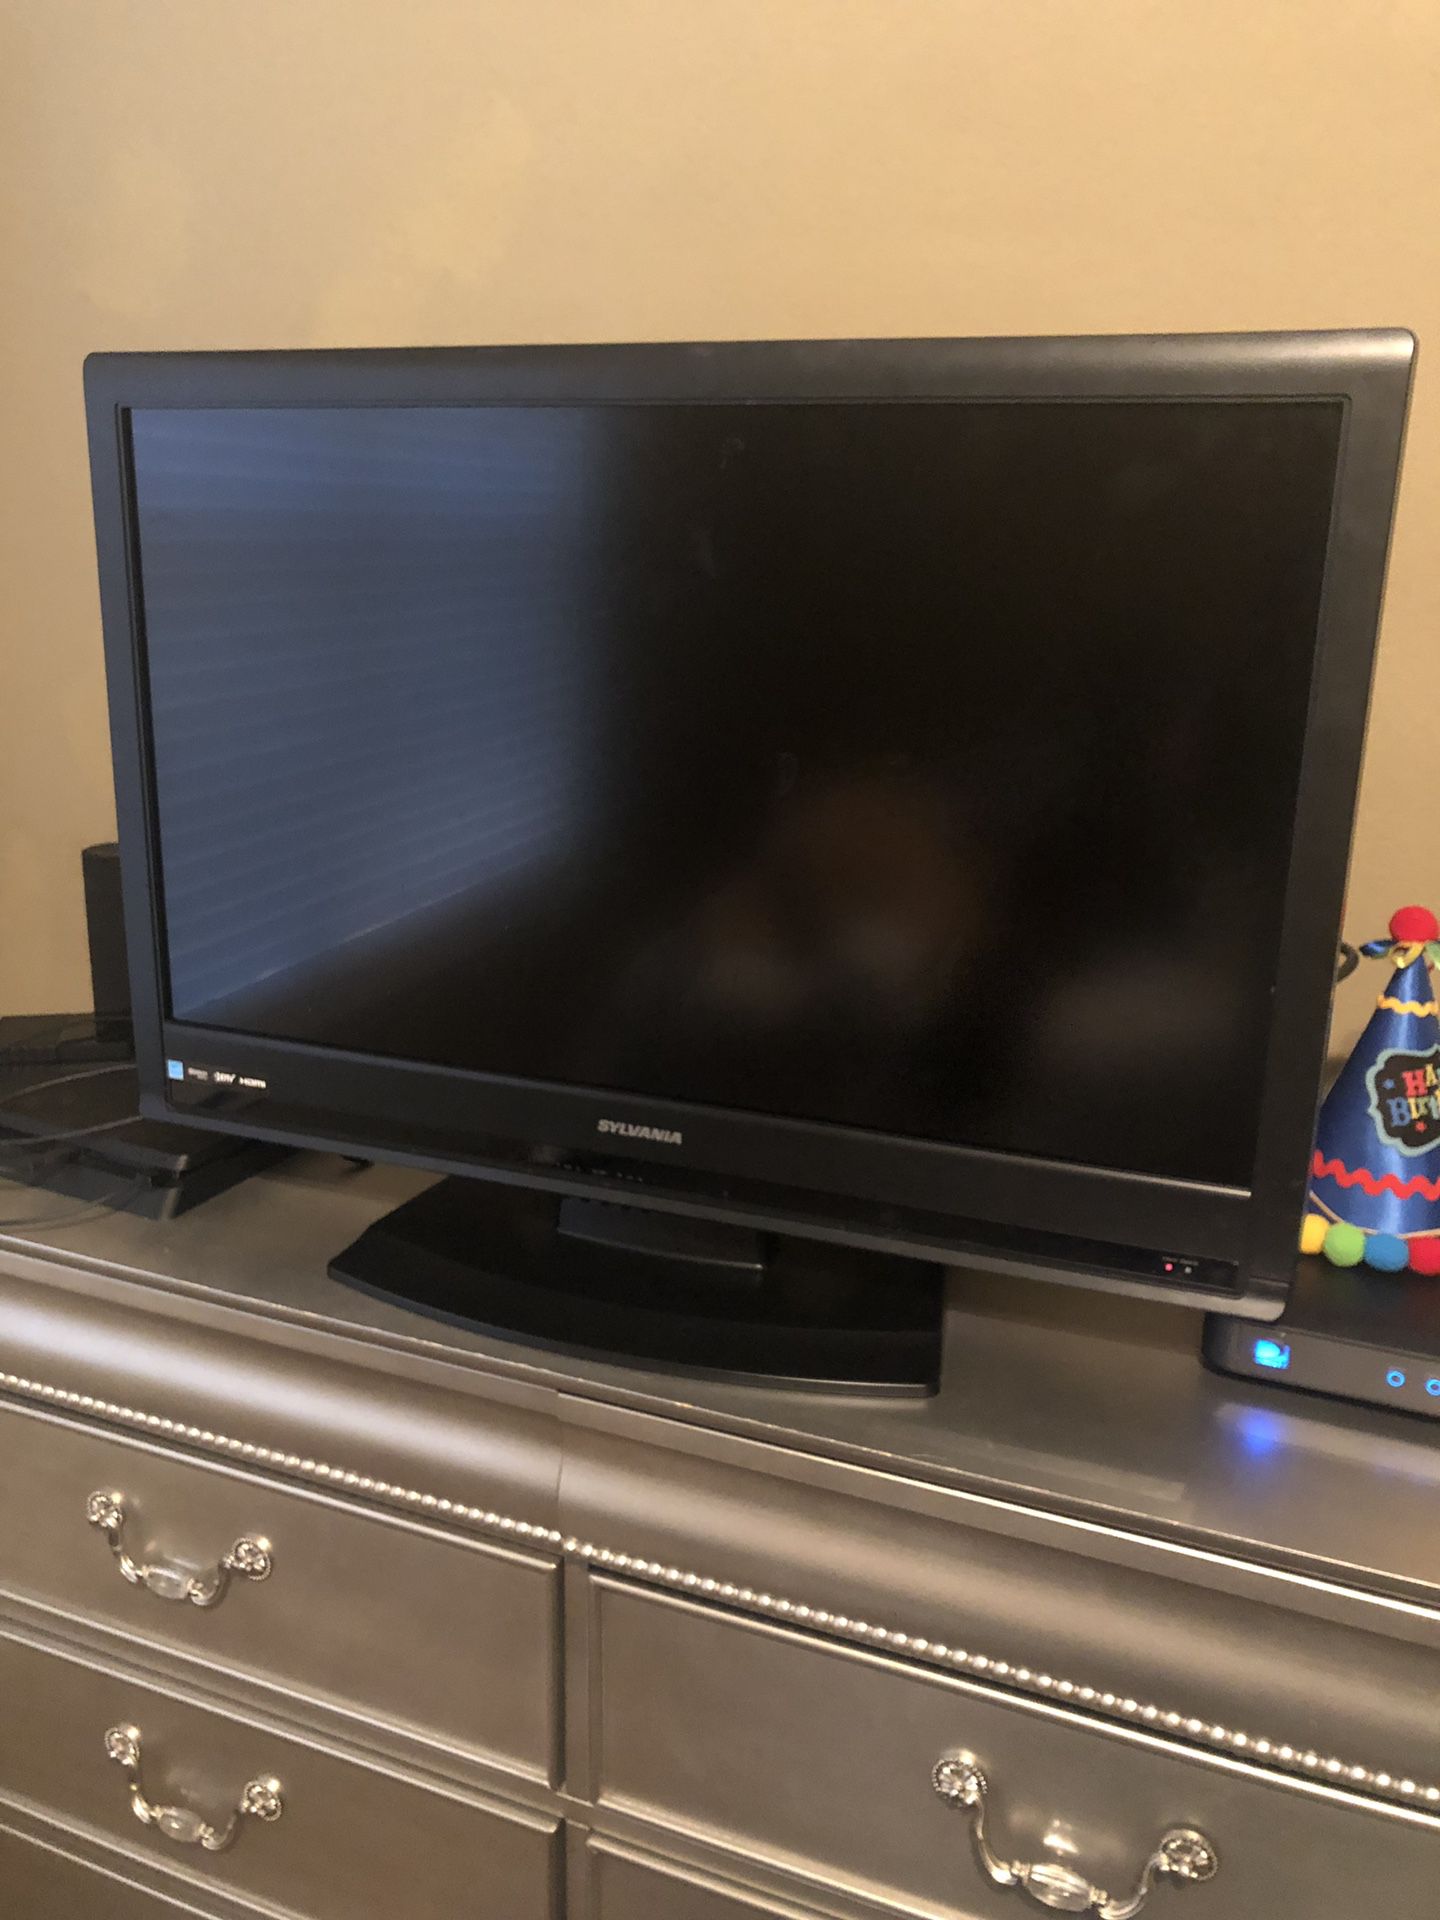 36” flatscreen tv